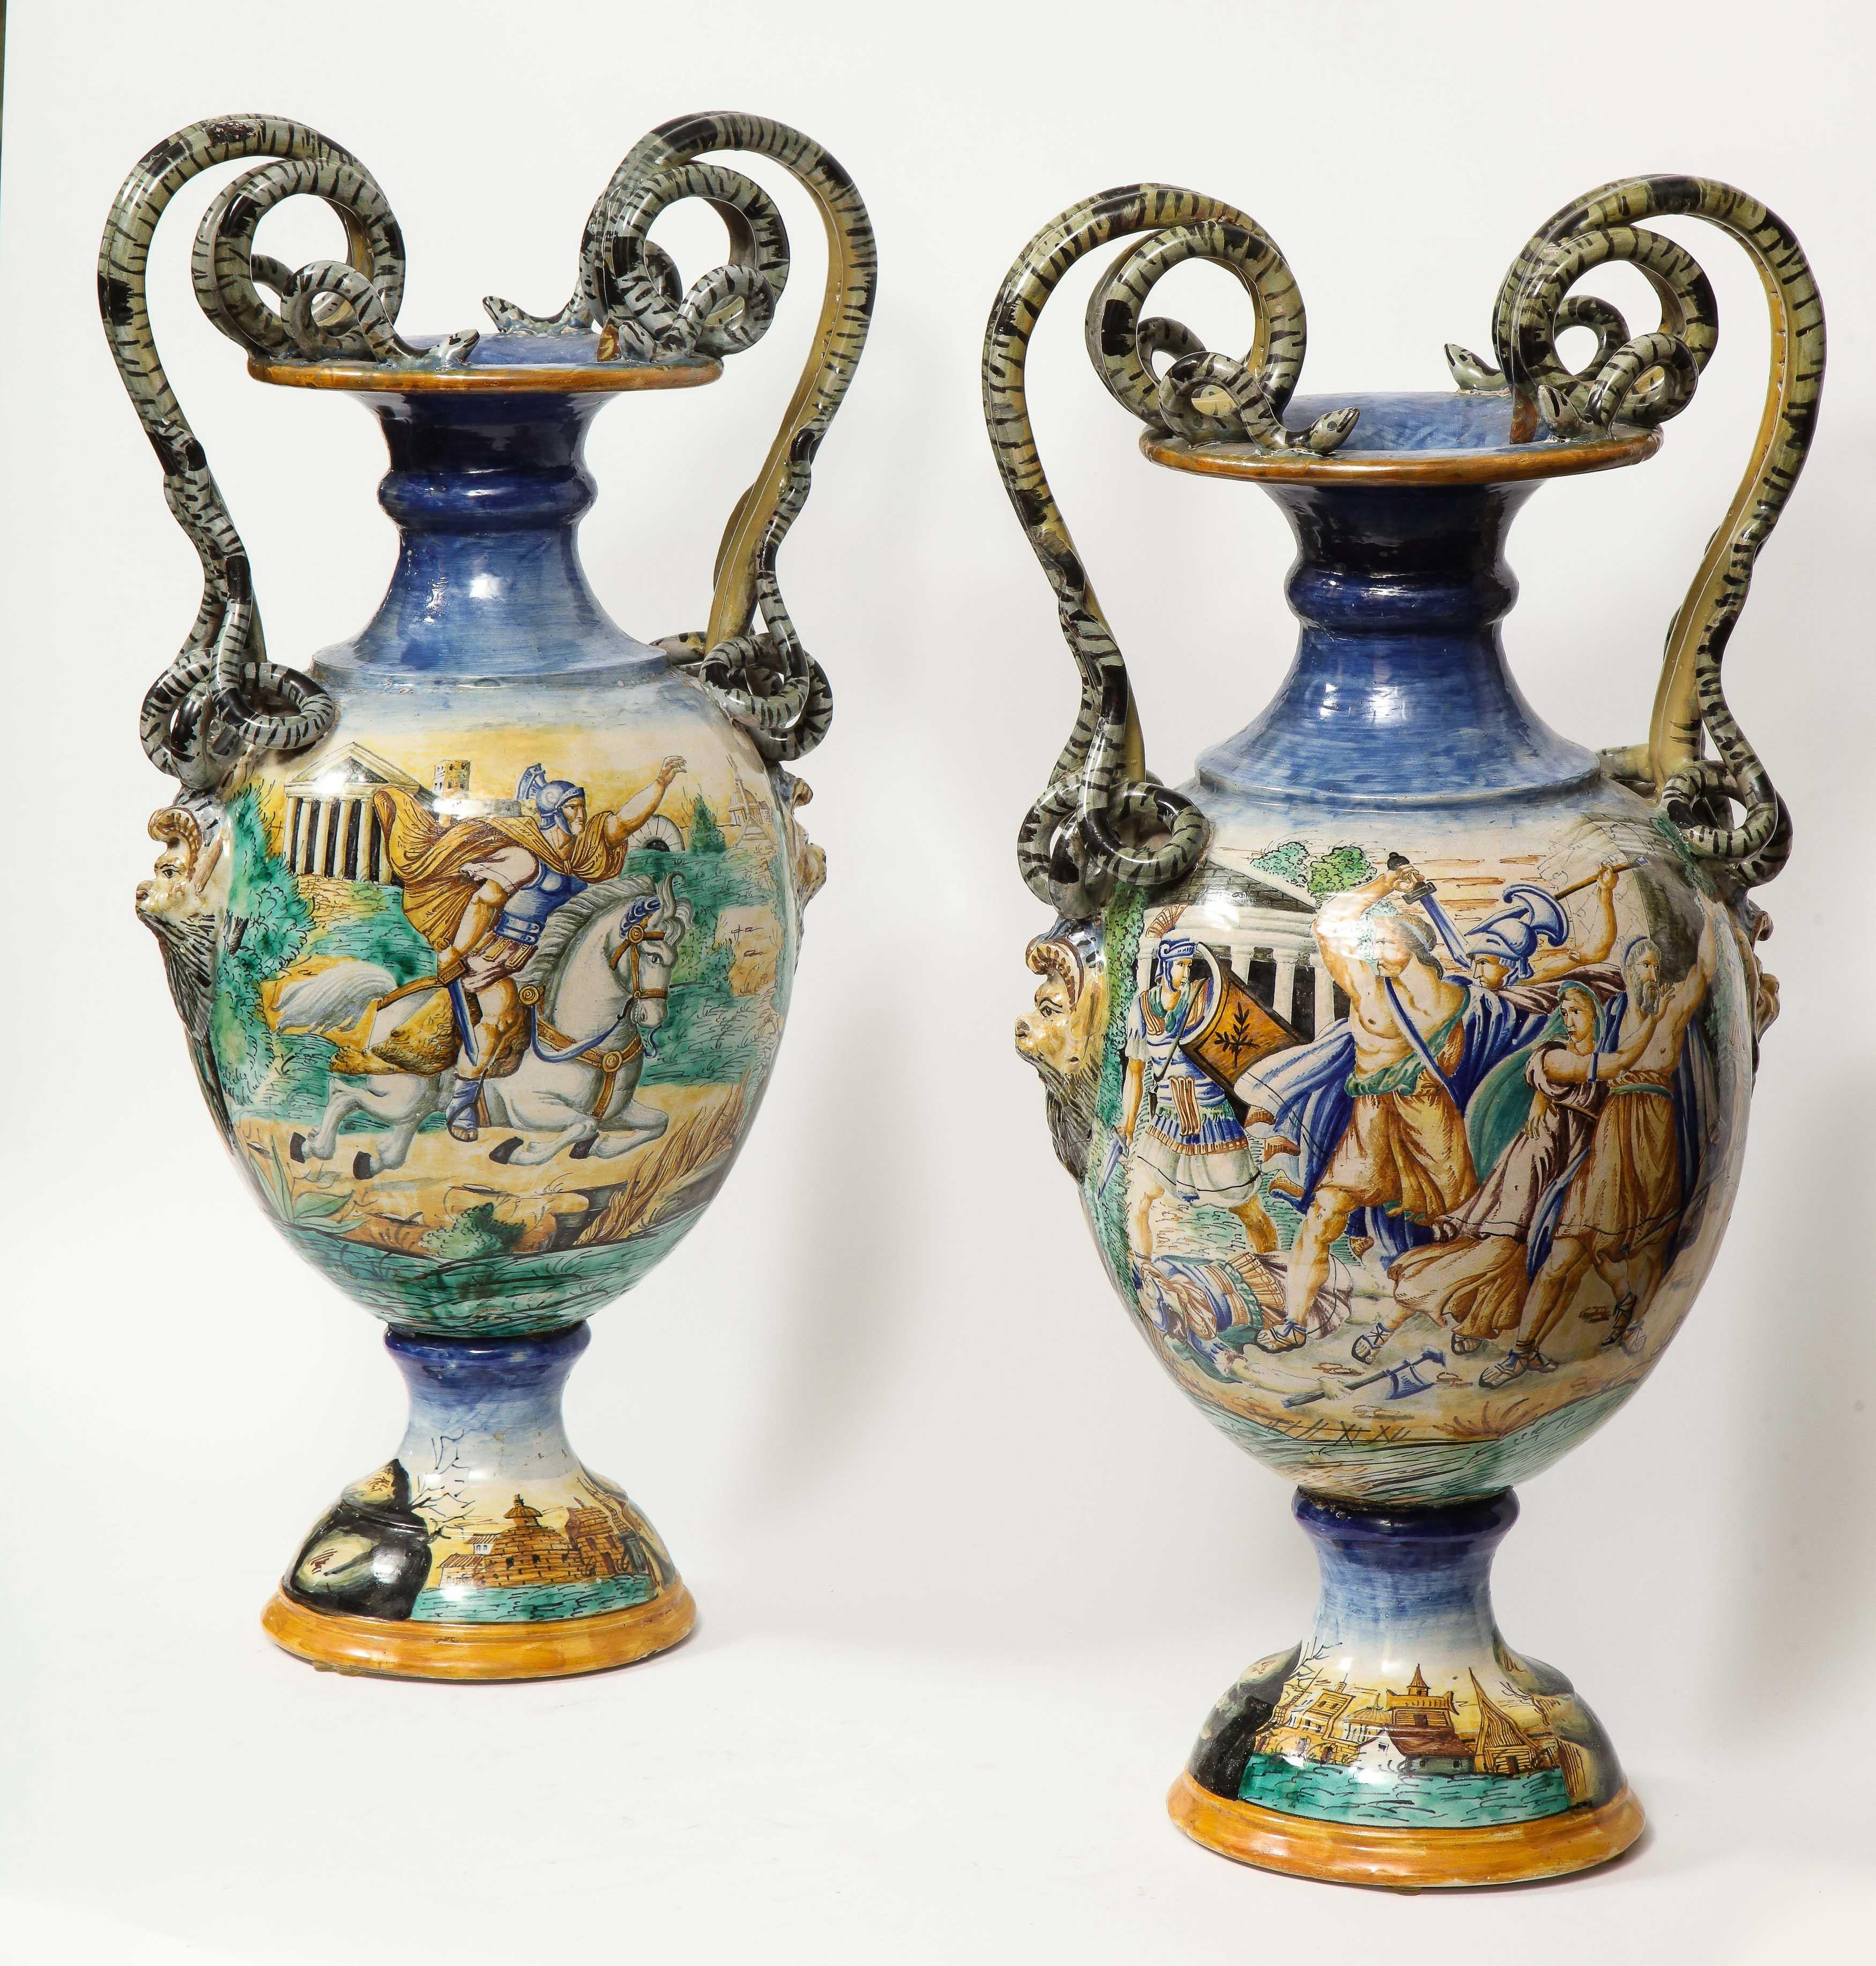 Renaissance Imposing Pair of Large Antique Italian Majolica Snake-Handled Vases